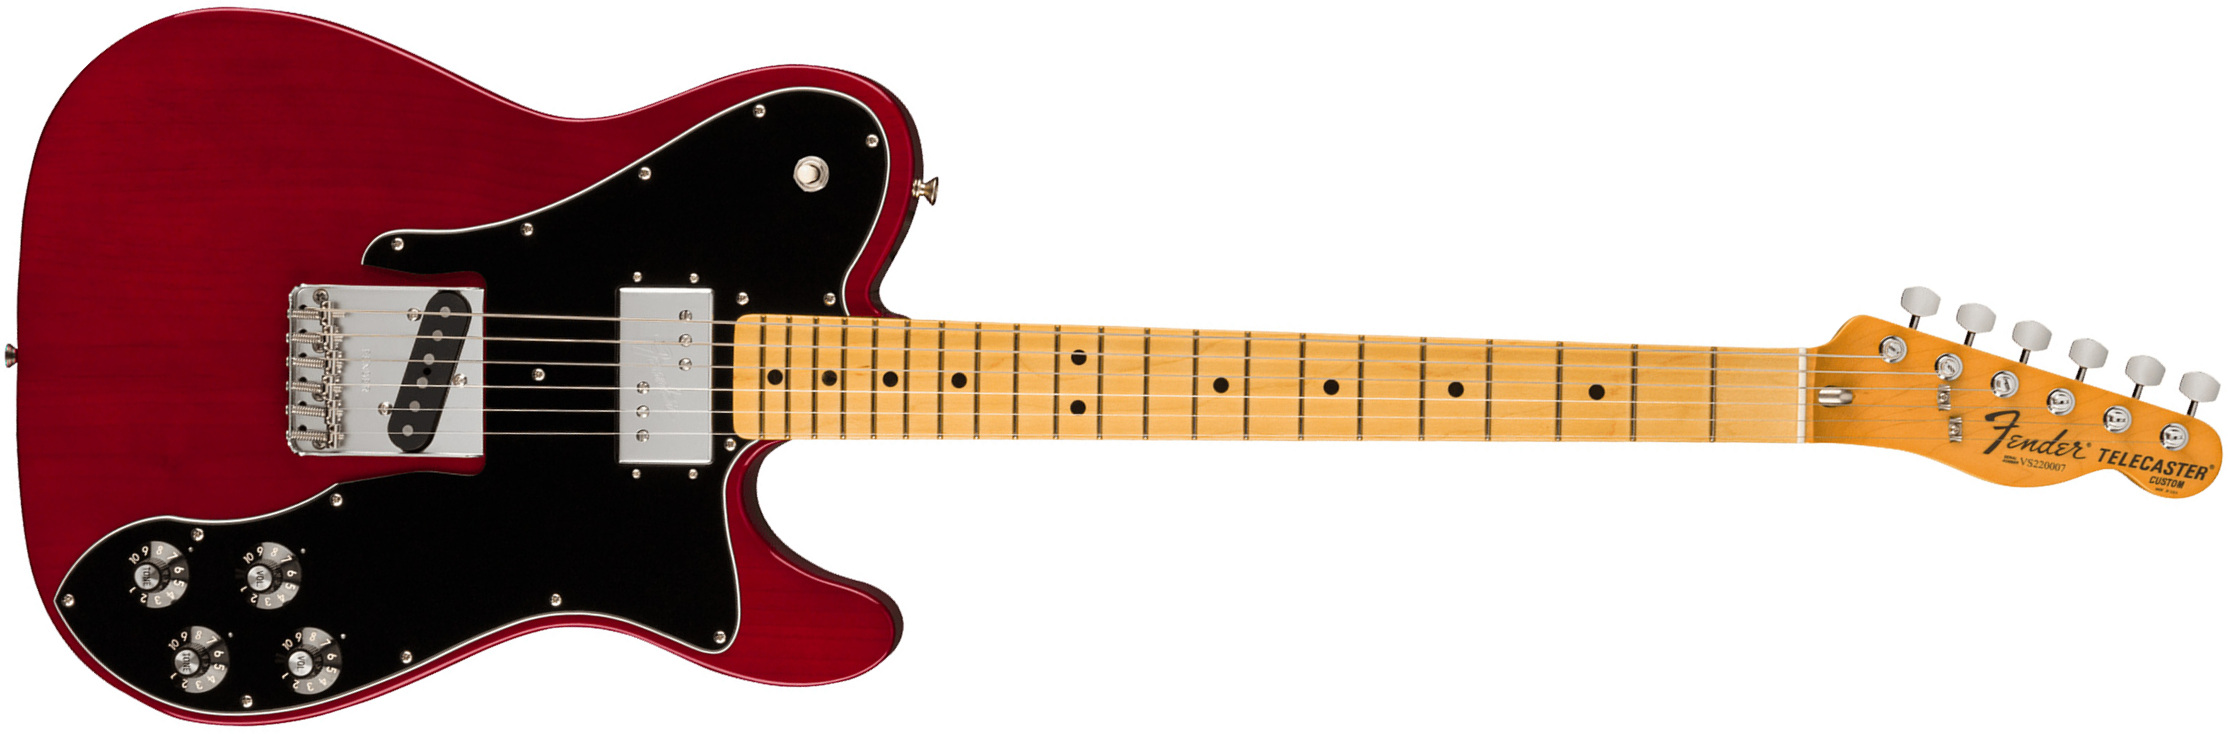 Fender Tele Custom 1977 American Vintage Ii Usa Sh Ht Mn - Wine - Tel shape electric guitar - Main picture